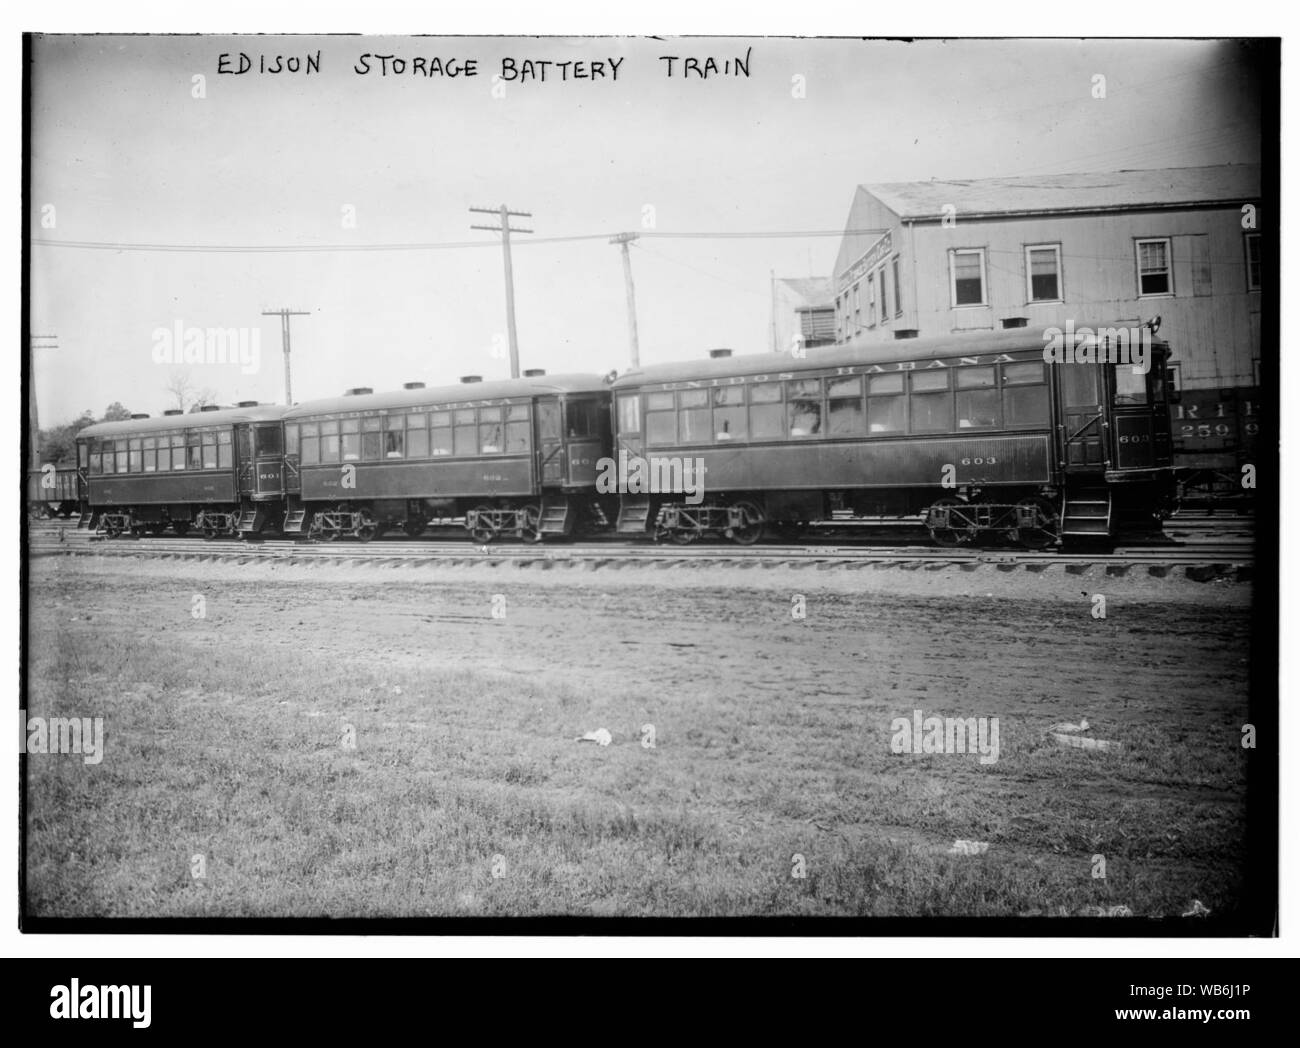 Edison Storage Battery Train Stock Photo